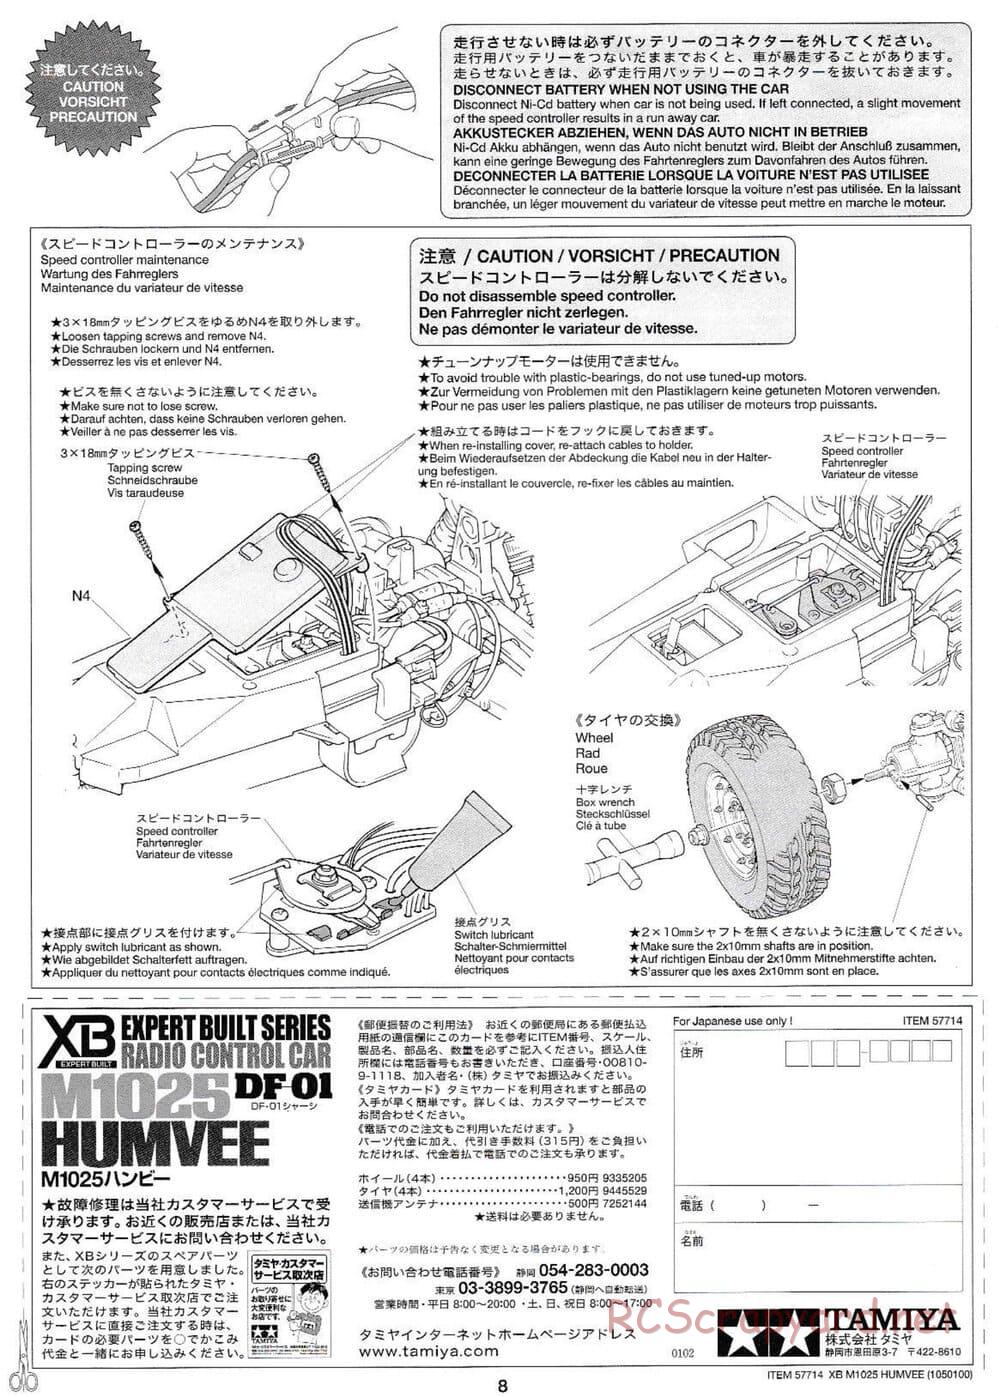 Tamiya - XB M1025 Humvee - DF-01 Chassis - Manual - Page 8